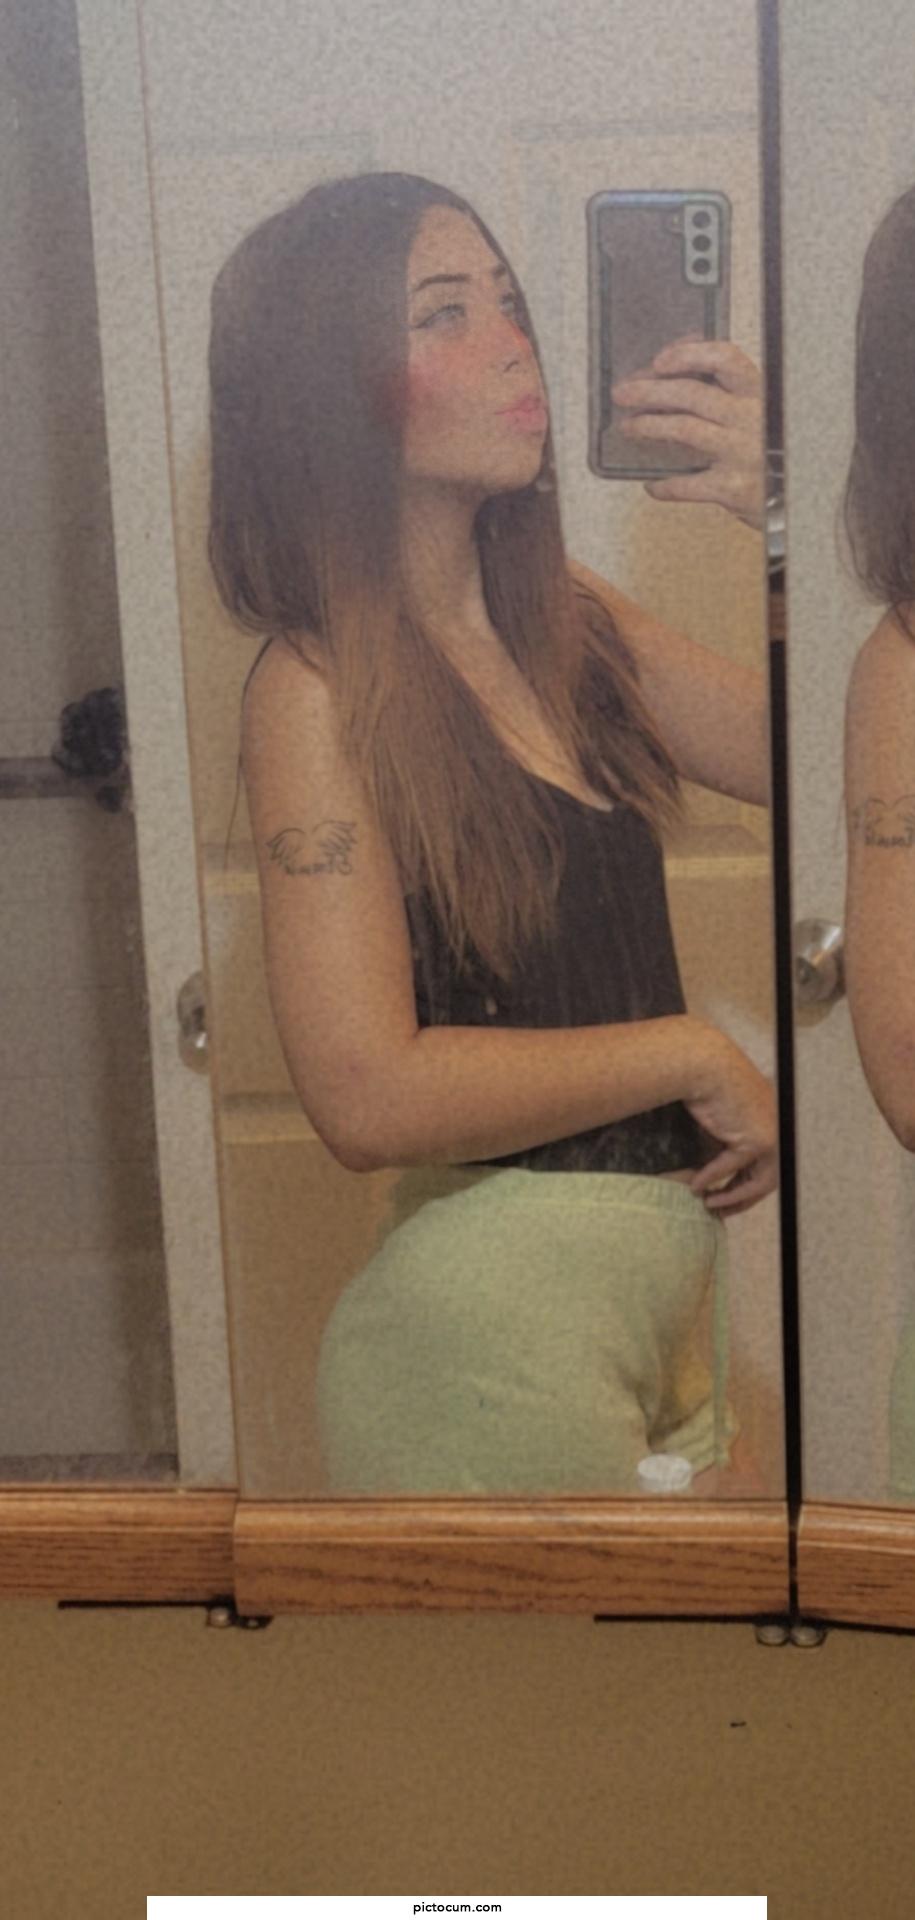 Sexy booty shorts SC roseb4b